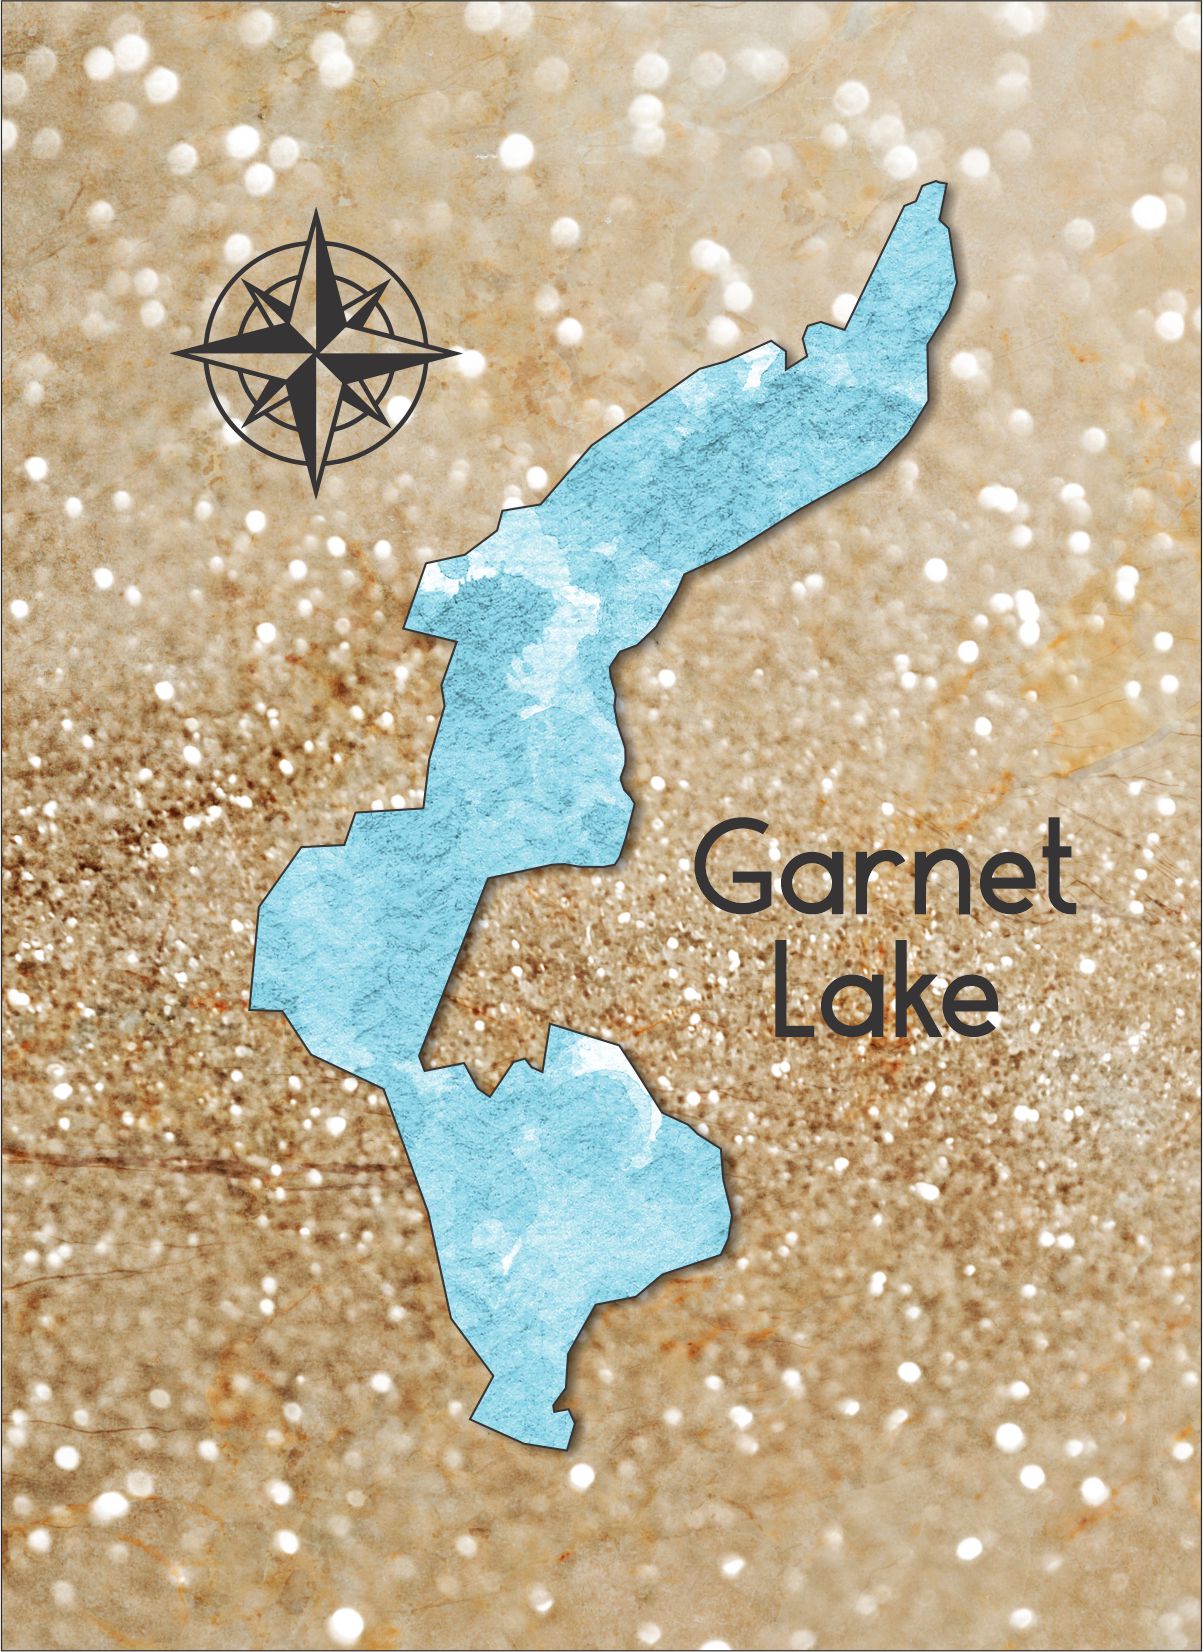 Garnet Lake New York - Suncity Collection lake cozies